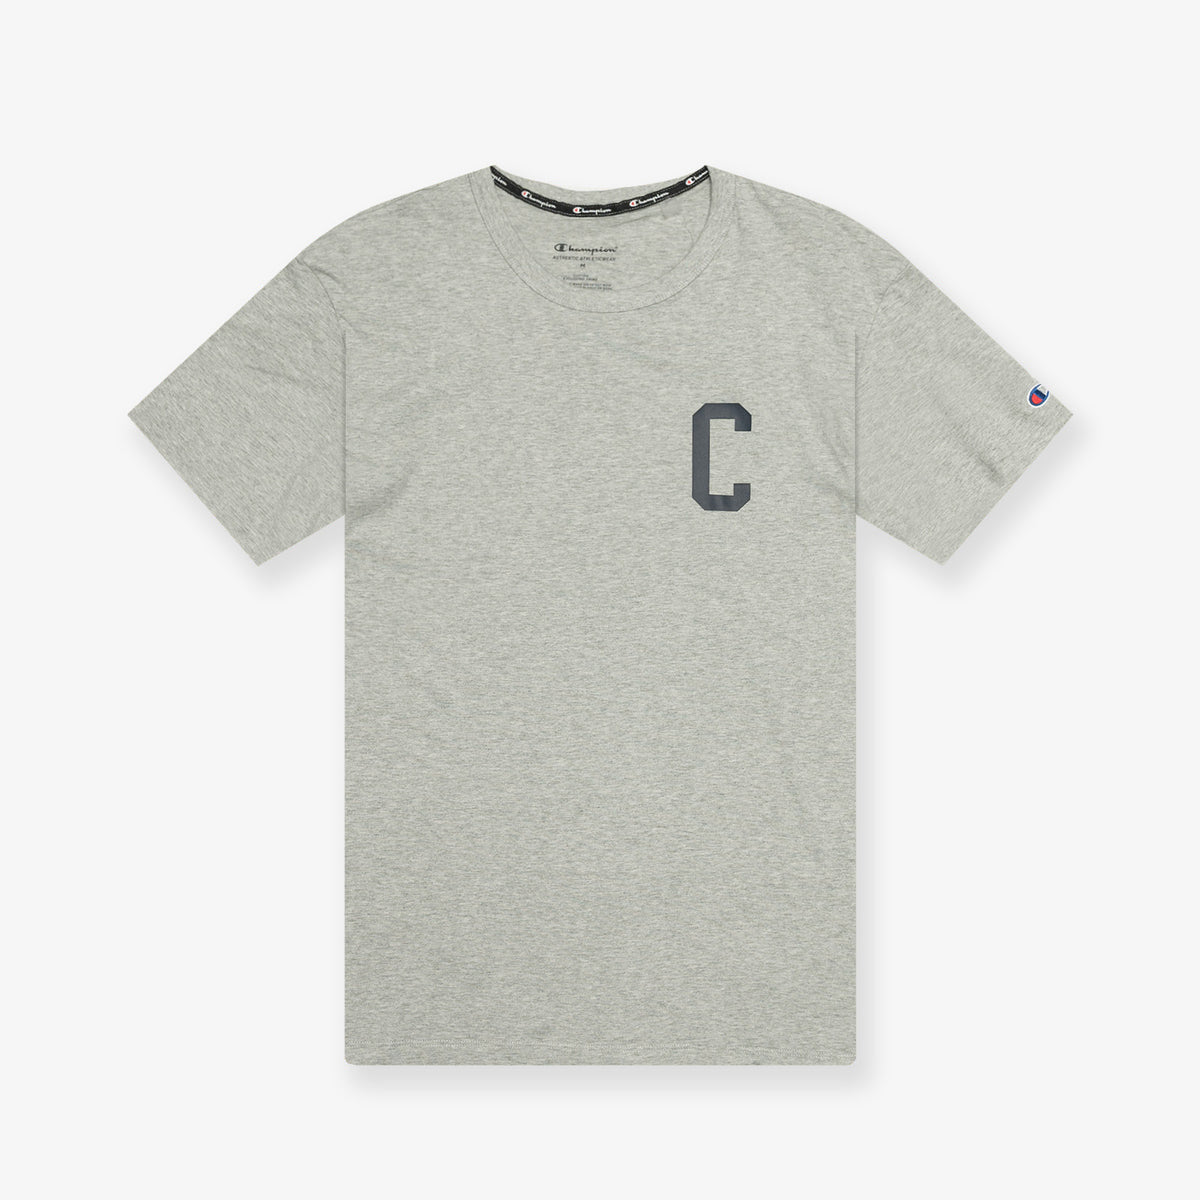 Graphic Big C T-Shirt - Grey Marle